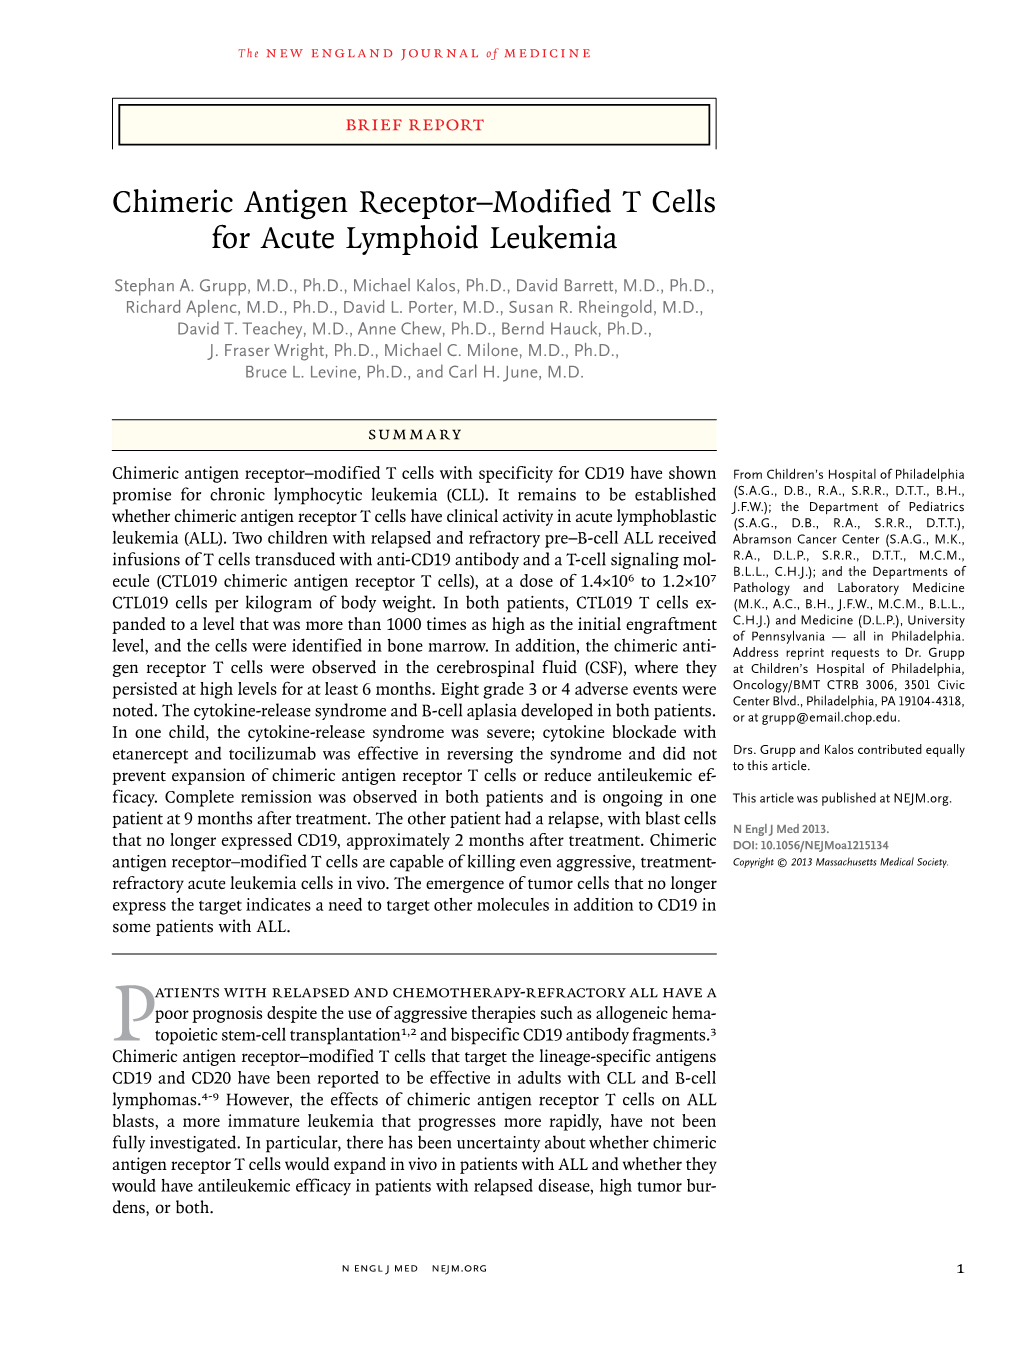 Chimeric Antigen Receptor–Modified T Cells for Acute Lymphoid Leukemia